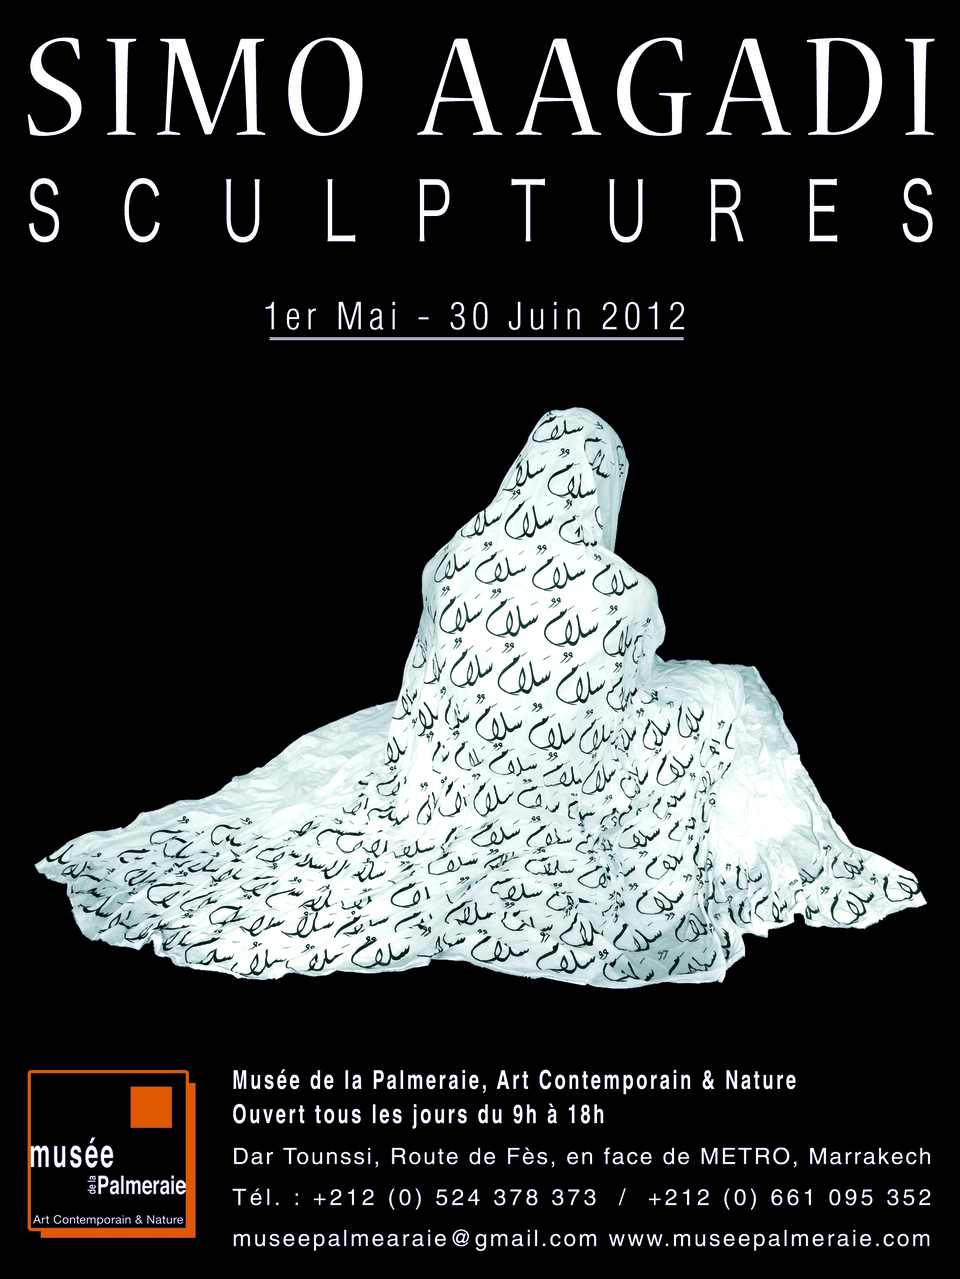 Du 1er mai eu 30 juin 2012, Simo Aâgadi expose ses sculptures au Musée de la Palmeraie à Marrakech